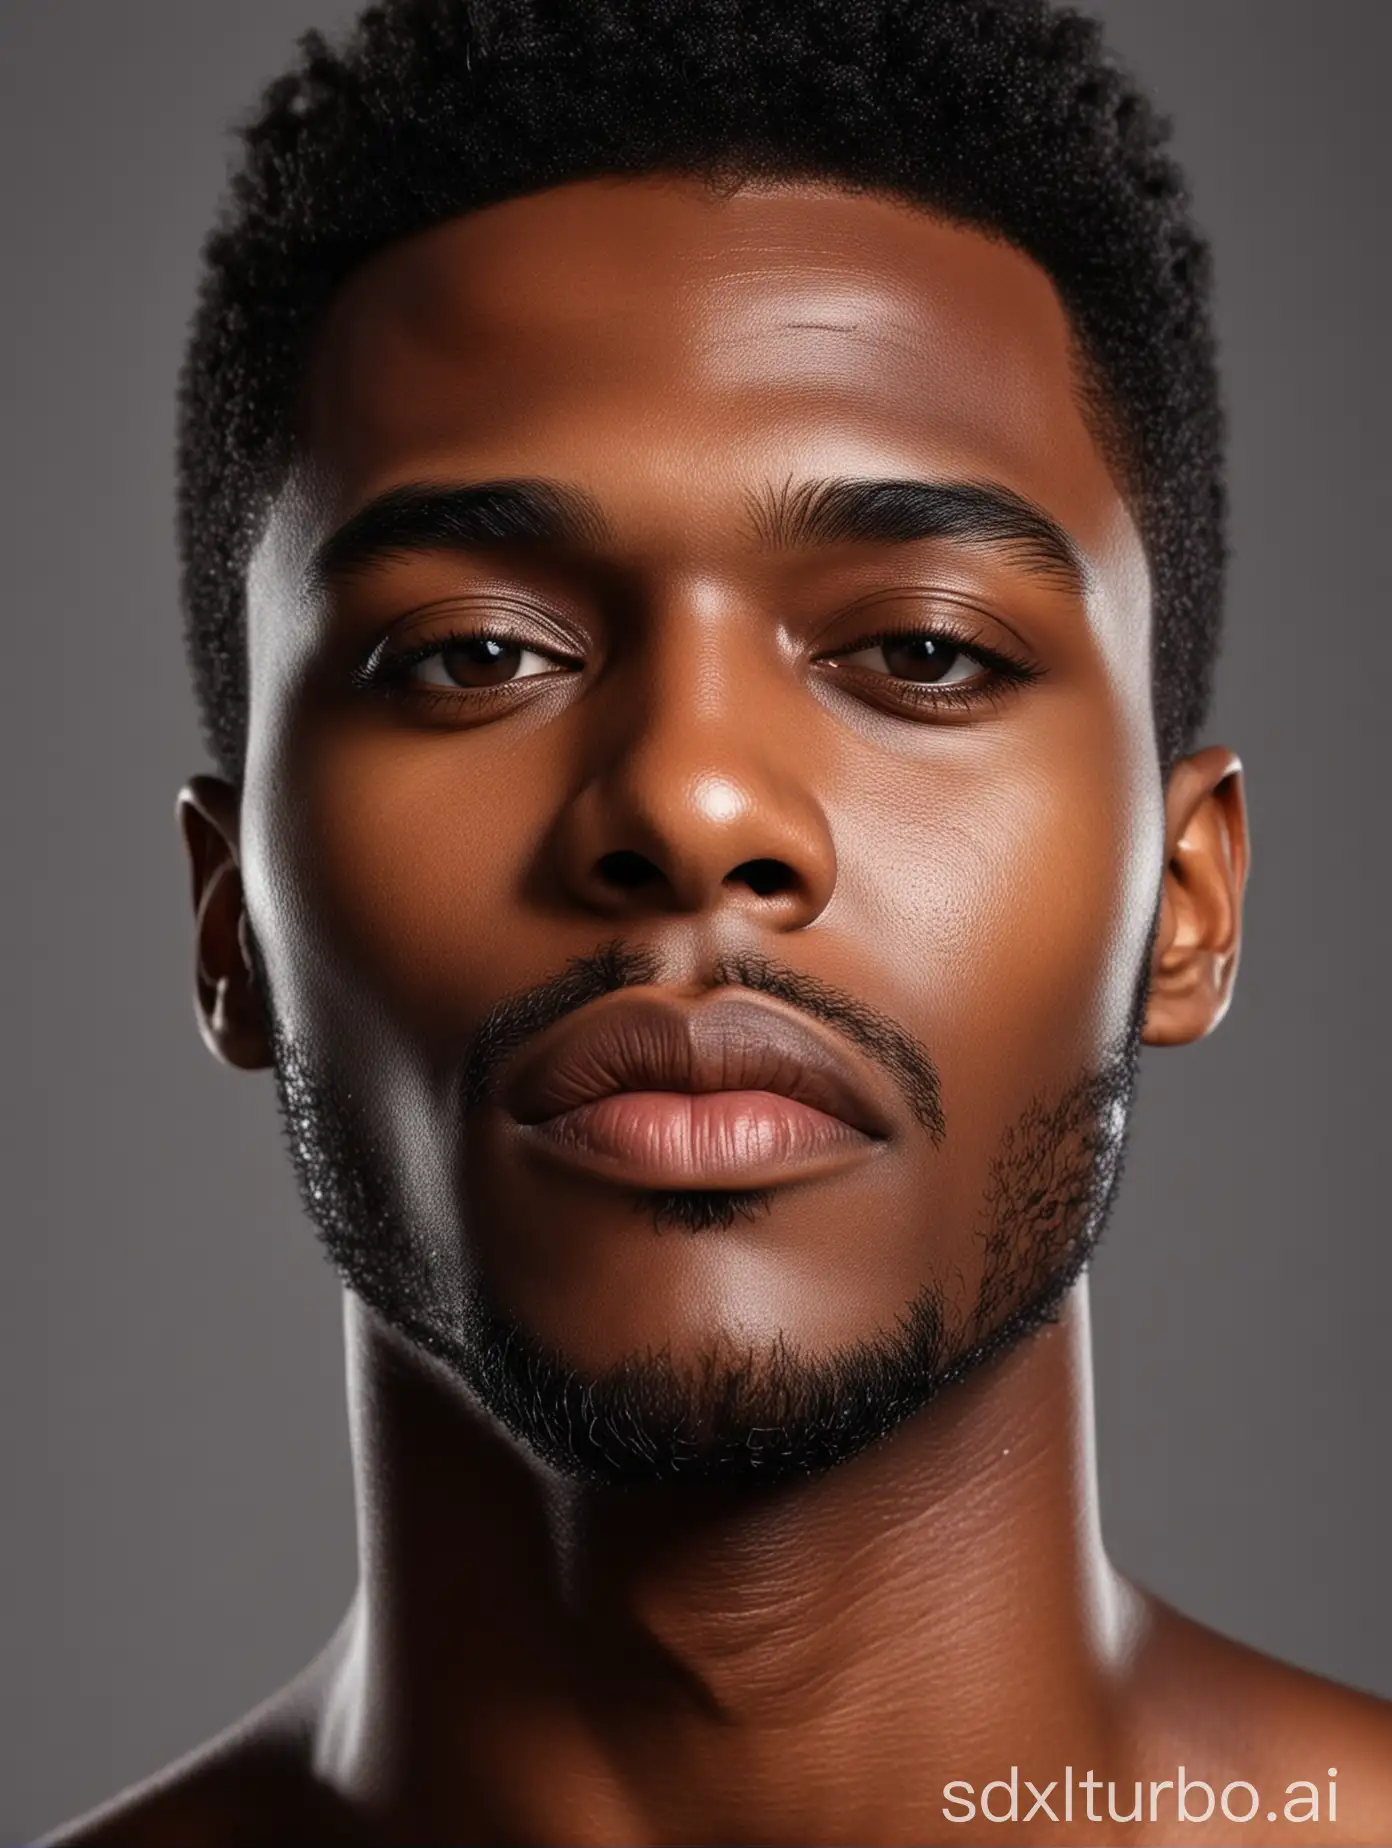 Black beautiful man, oily skin toner, Ember skin, close up, studio light